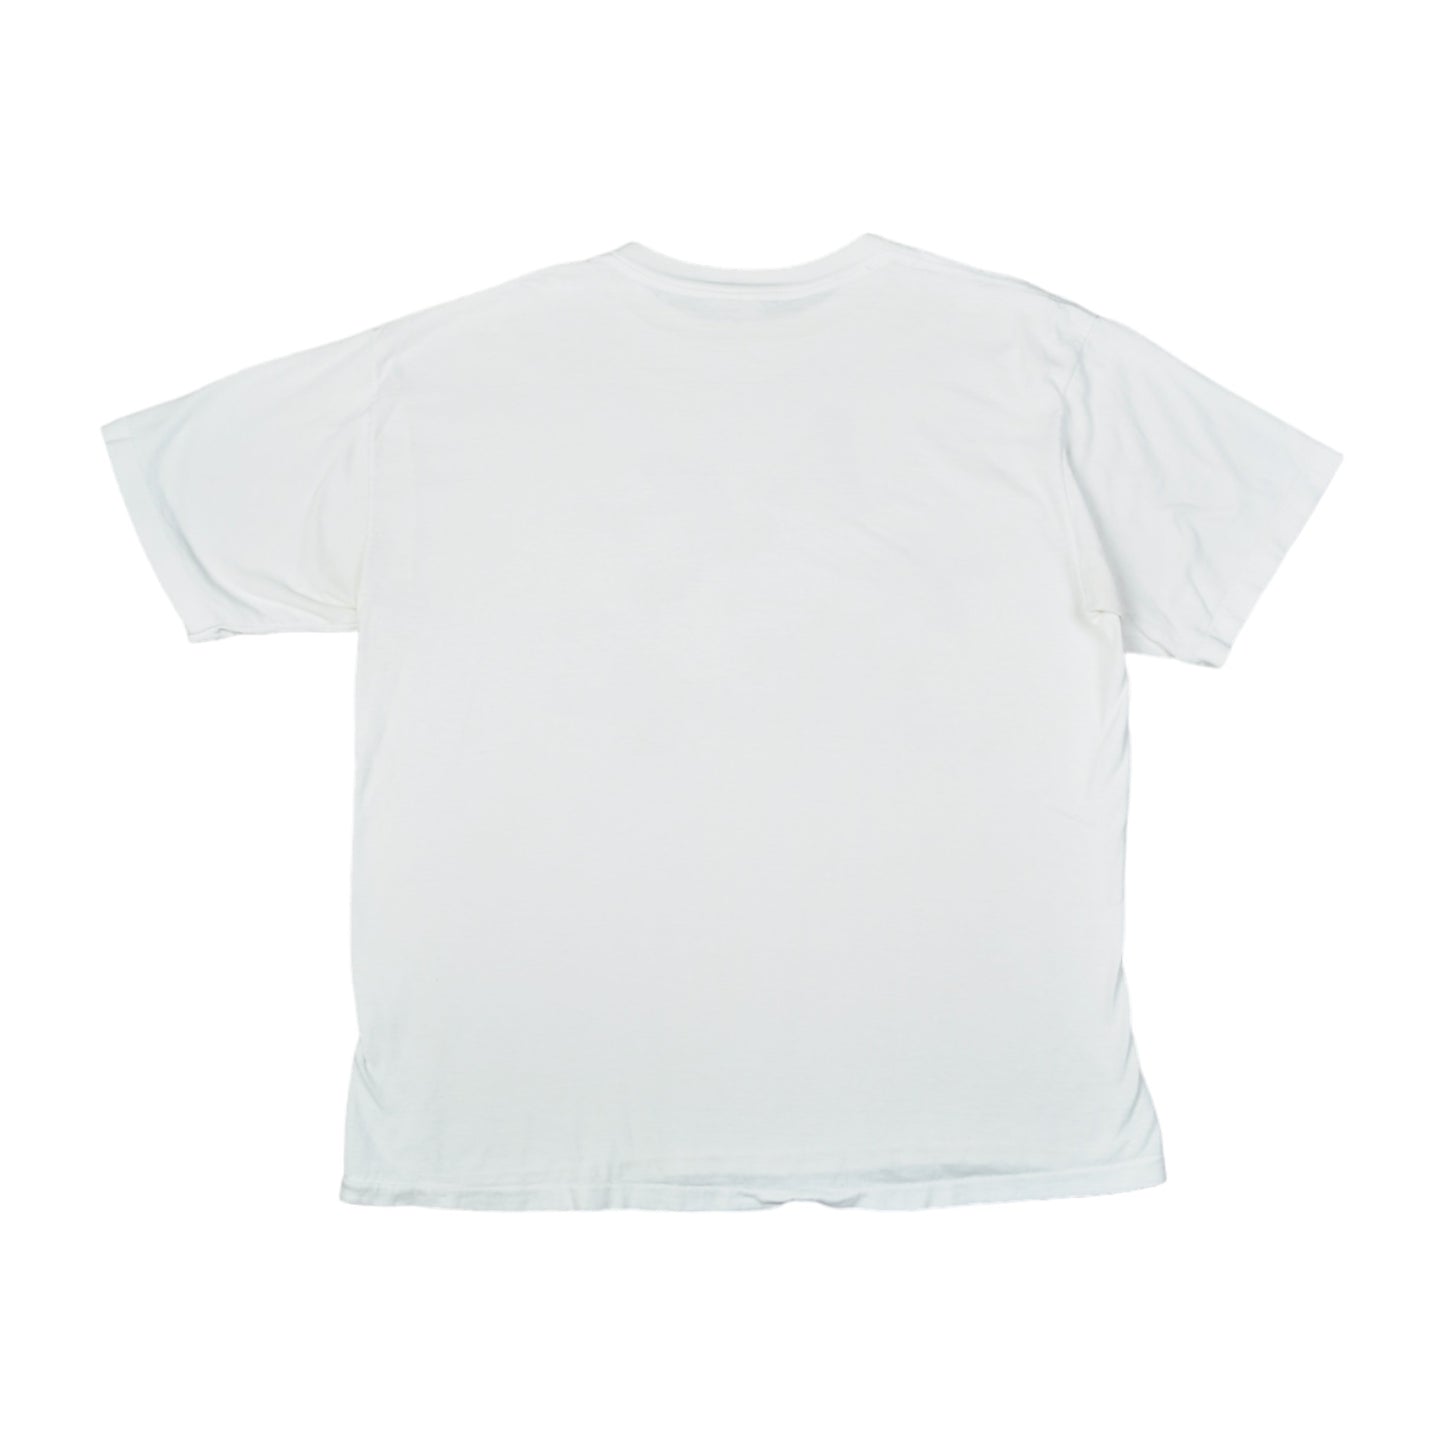 Vintage Florida Wildlife Single Stitch T-Shirt White XL